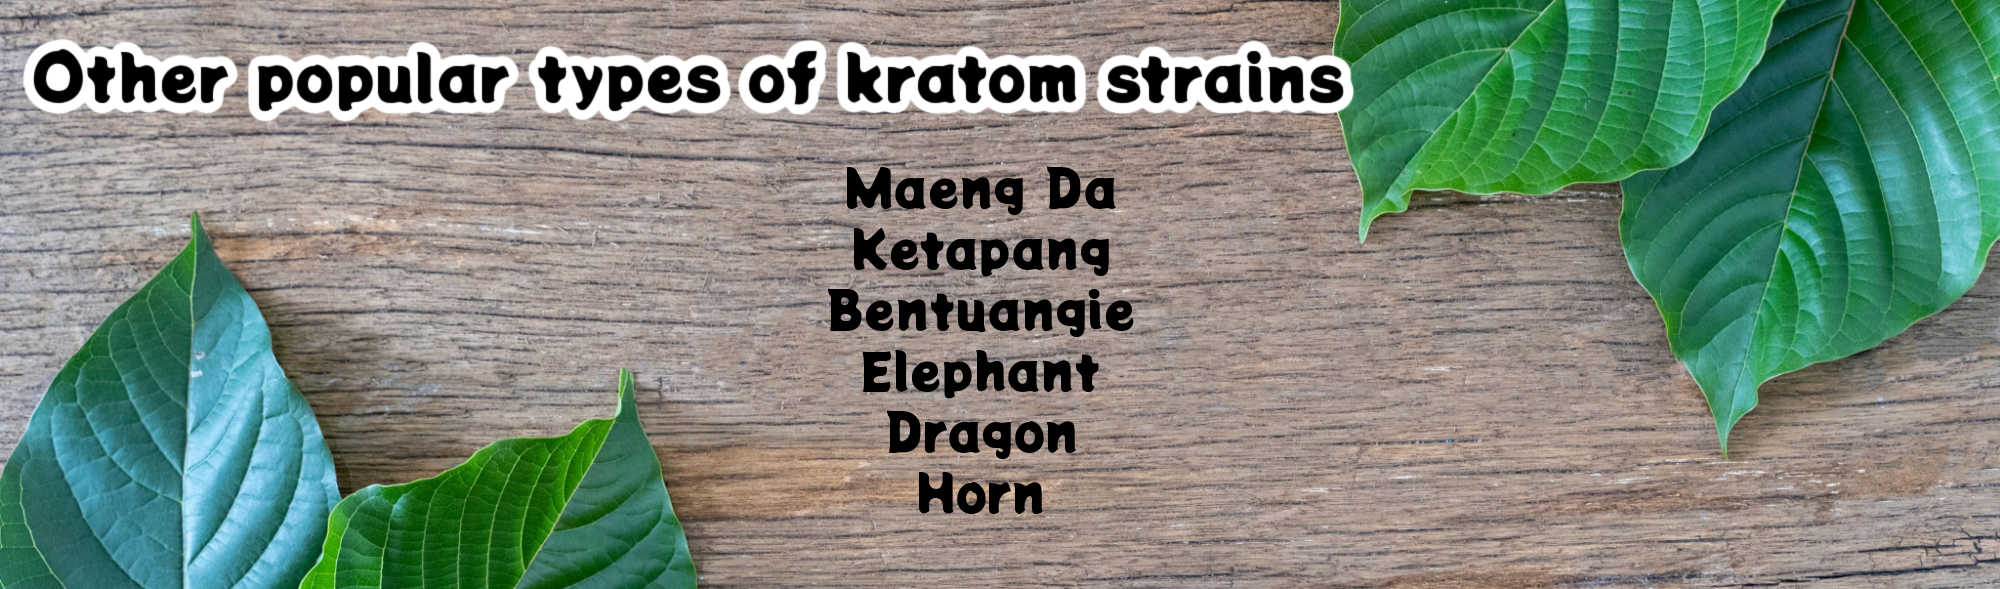 image of other popular types of kratom strains